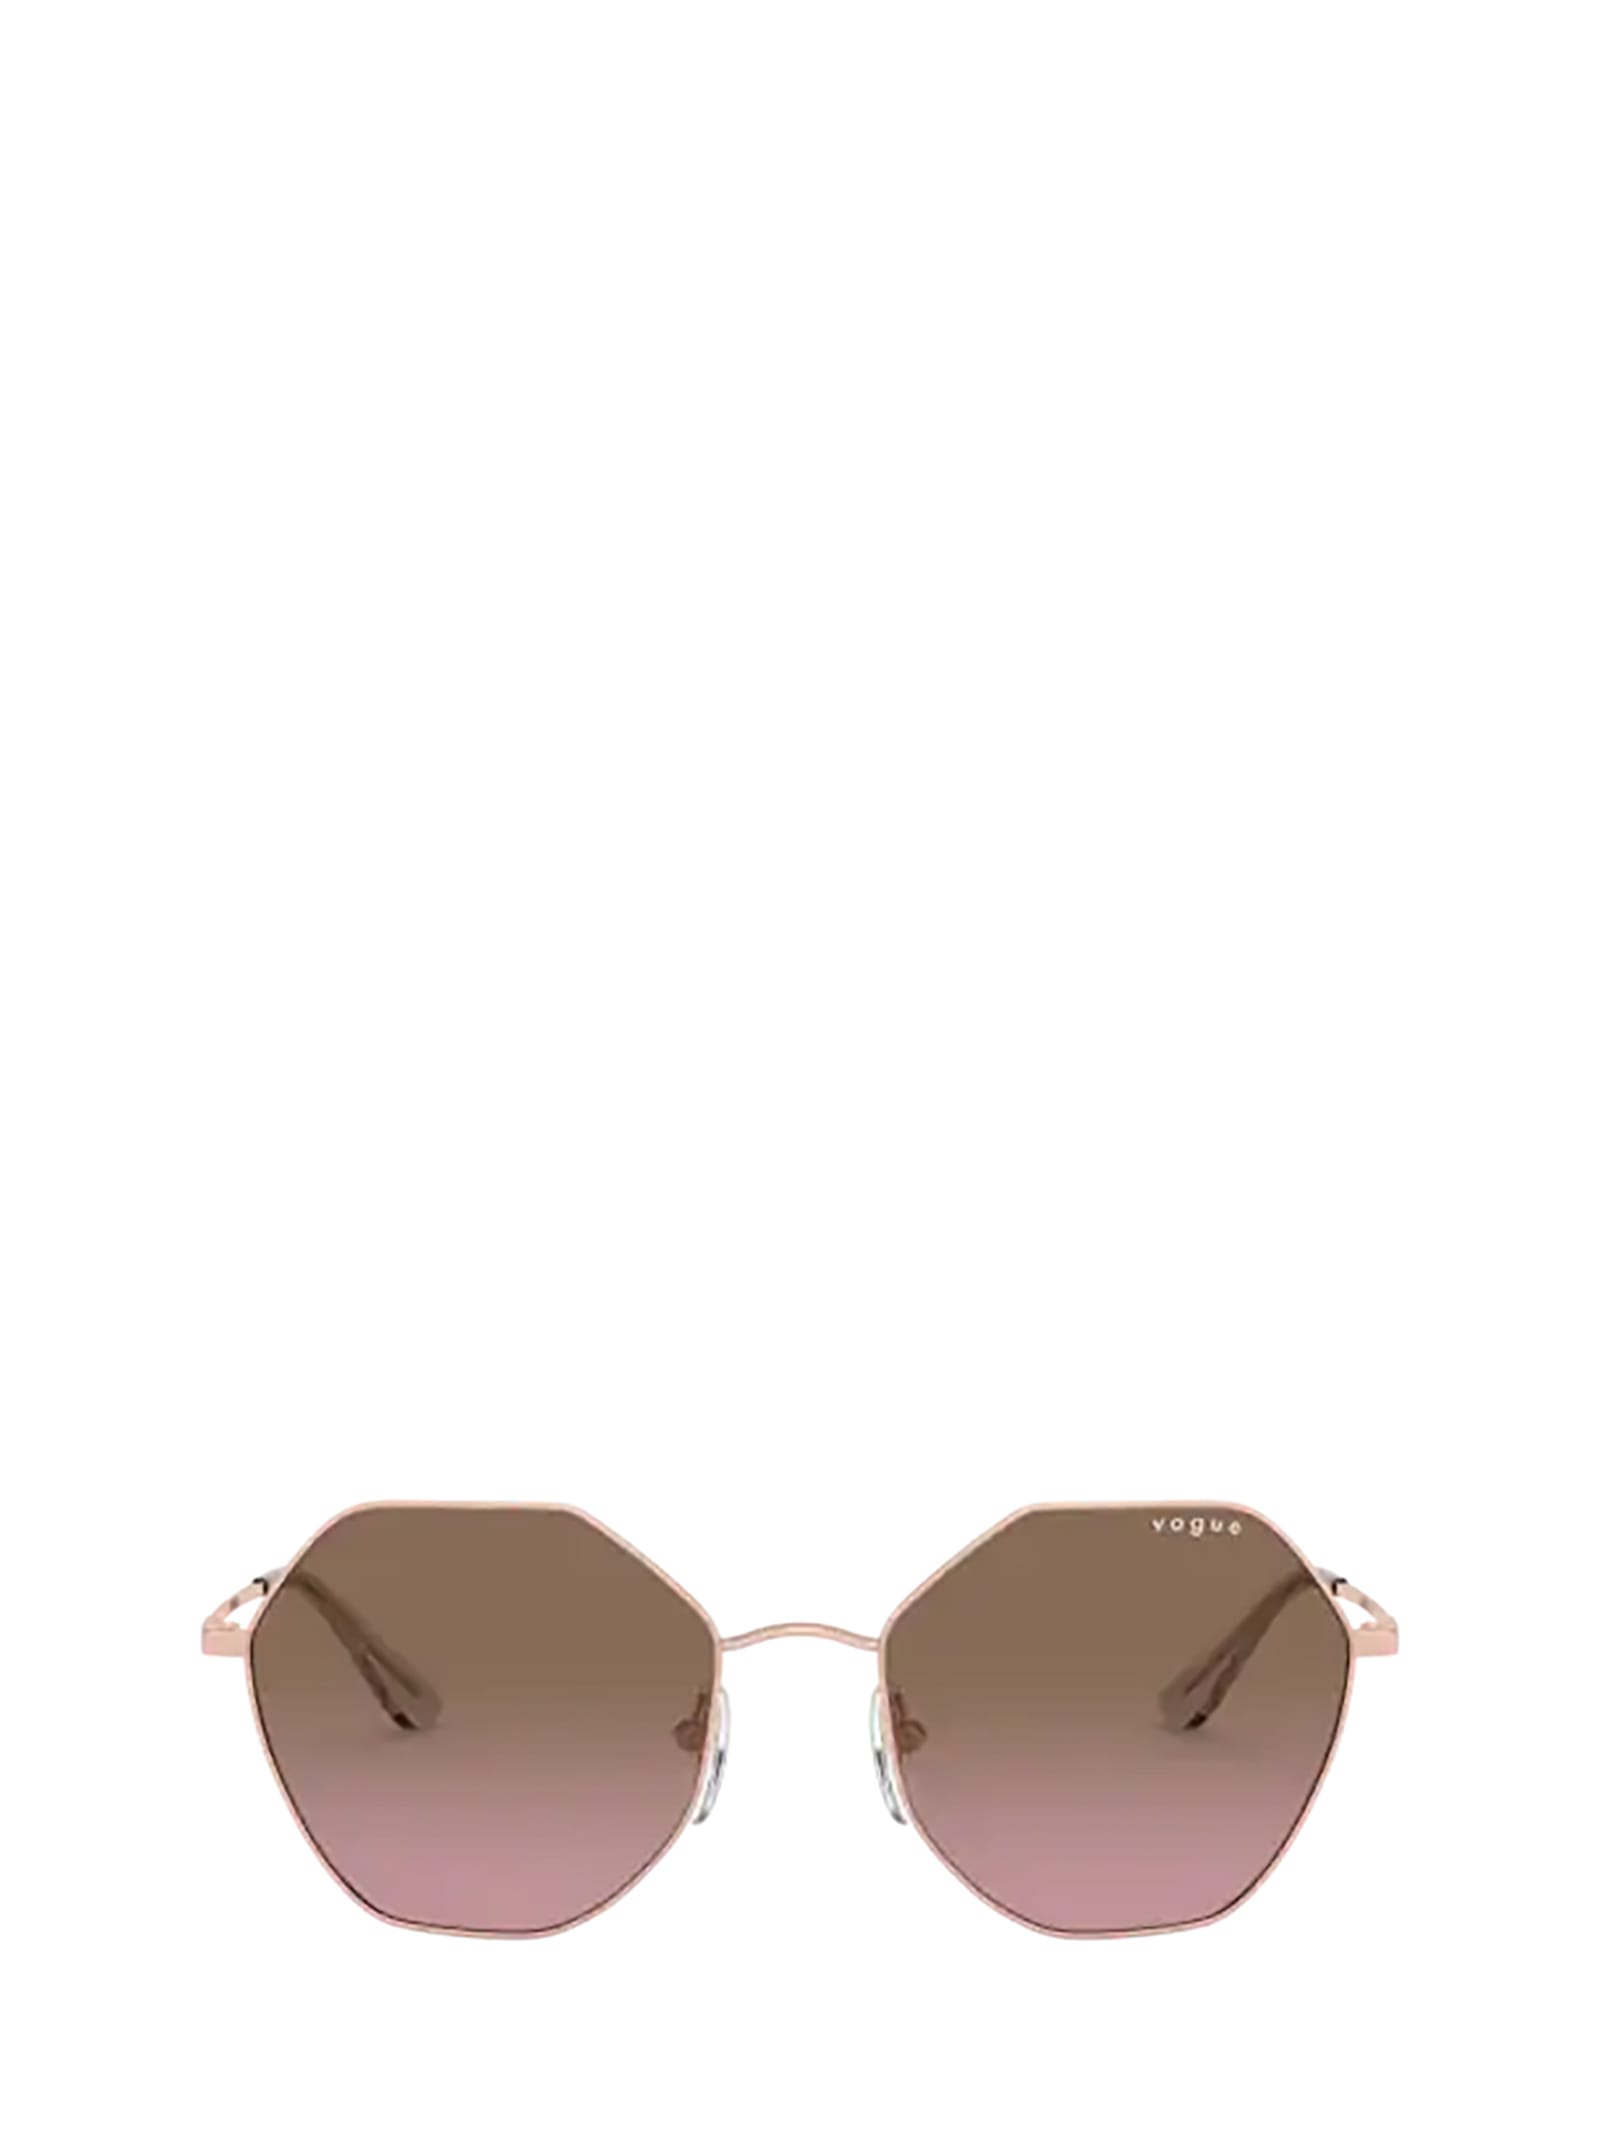 Vogue Eyewear Vogue Vo4180s Rose Gold Sunglasses